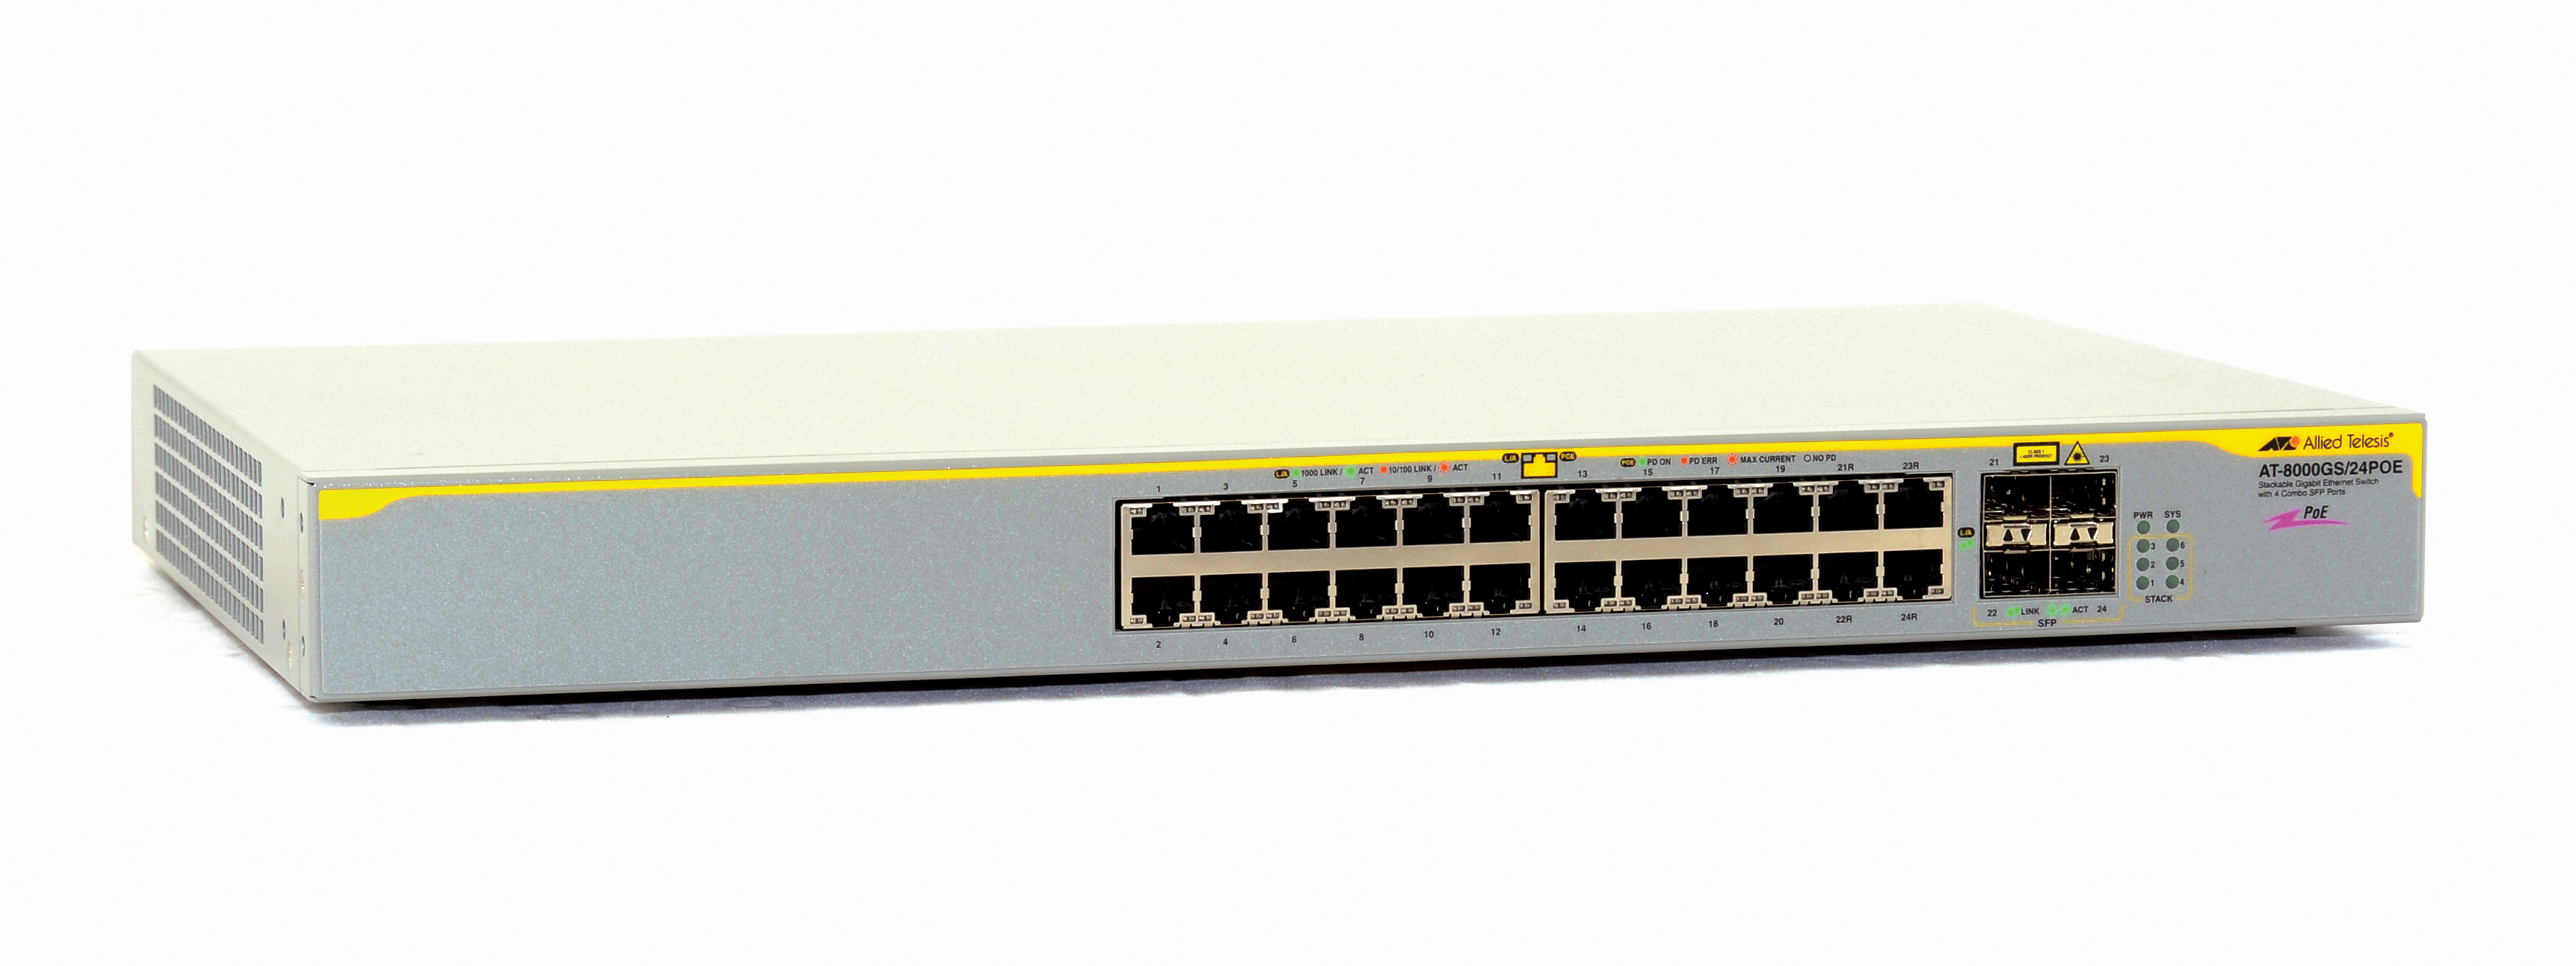 Коммутатор Allied Telesis AT-8000GS, 24xRJ-45 1Gbps ports, 4xSFP 1Gbps ports, Layer L2, Web/CLI managed, 18xPoE ports (PoE power 140W), Stackable, 1U rack